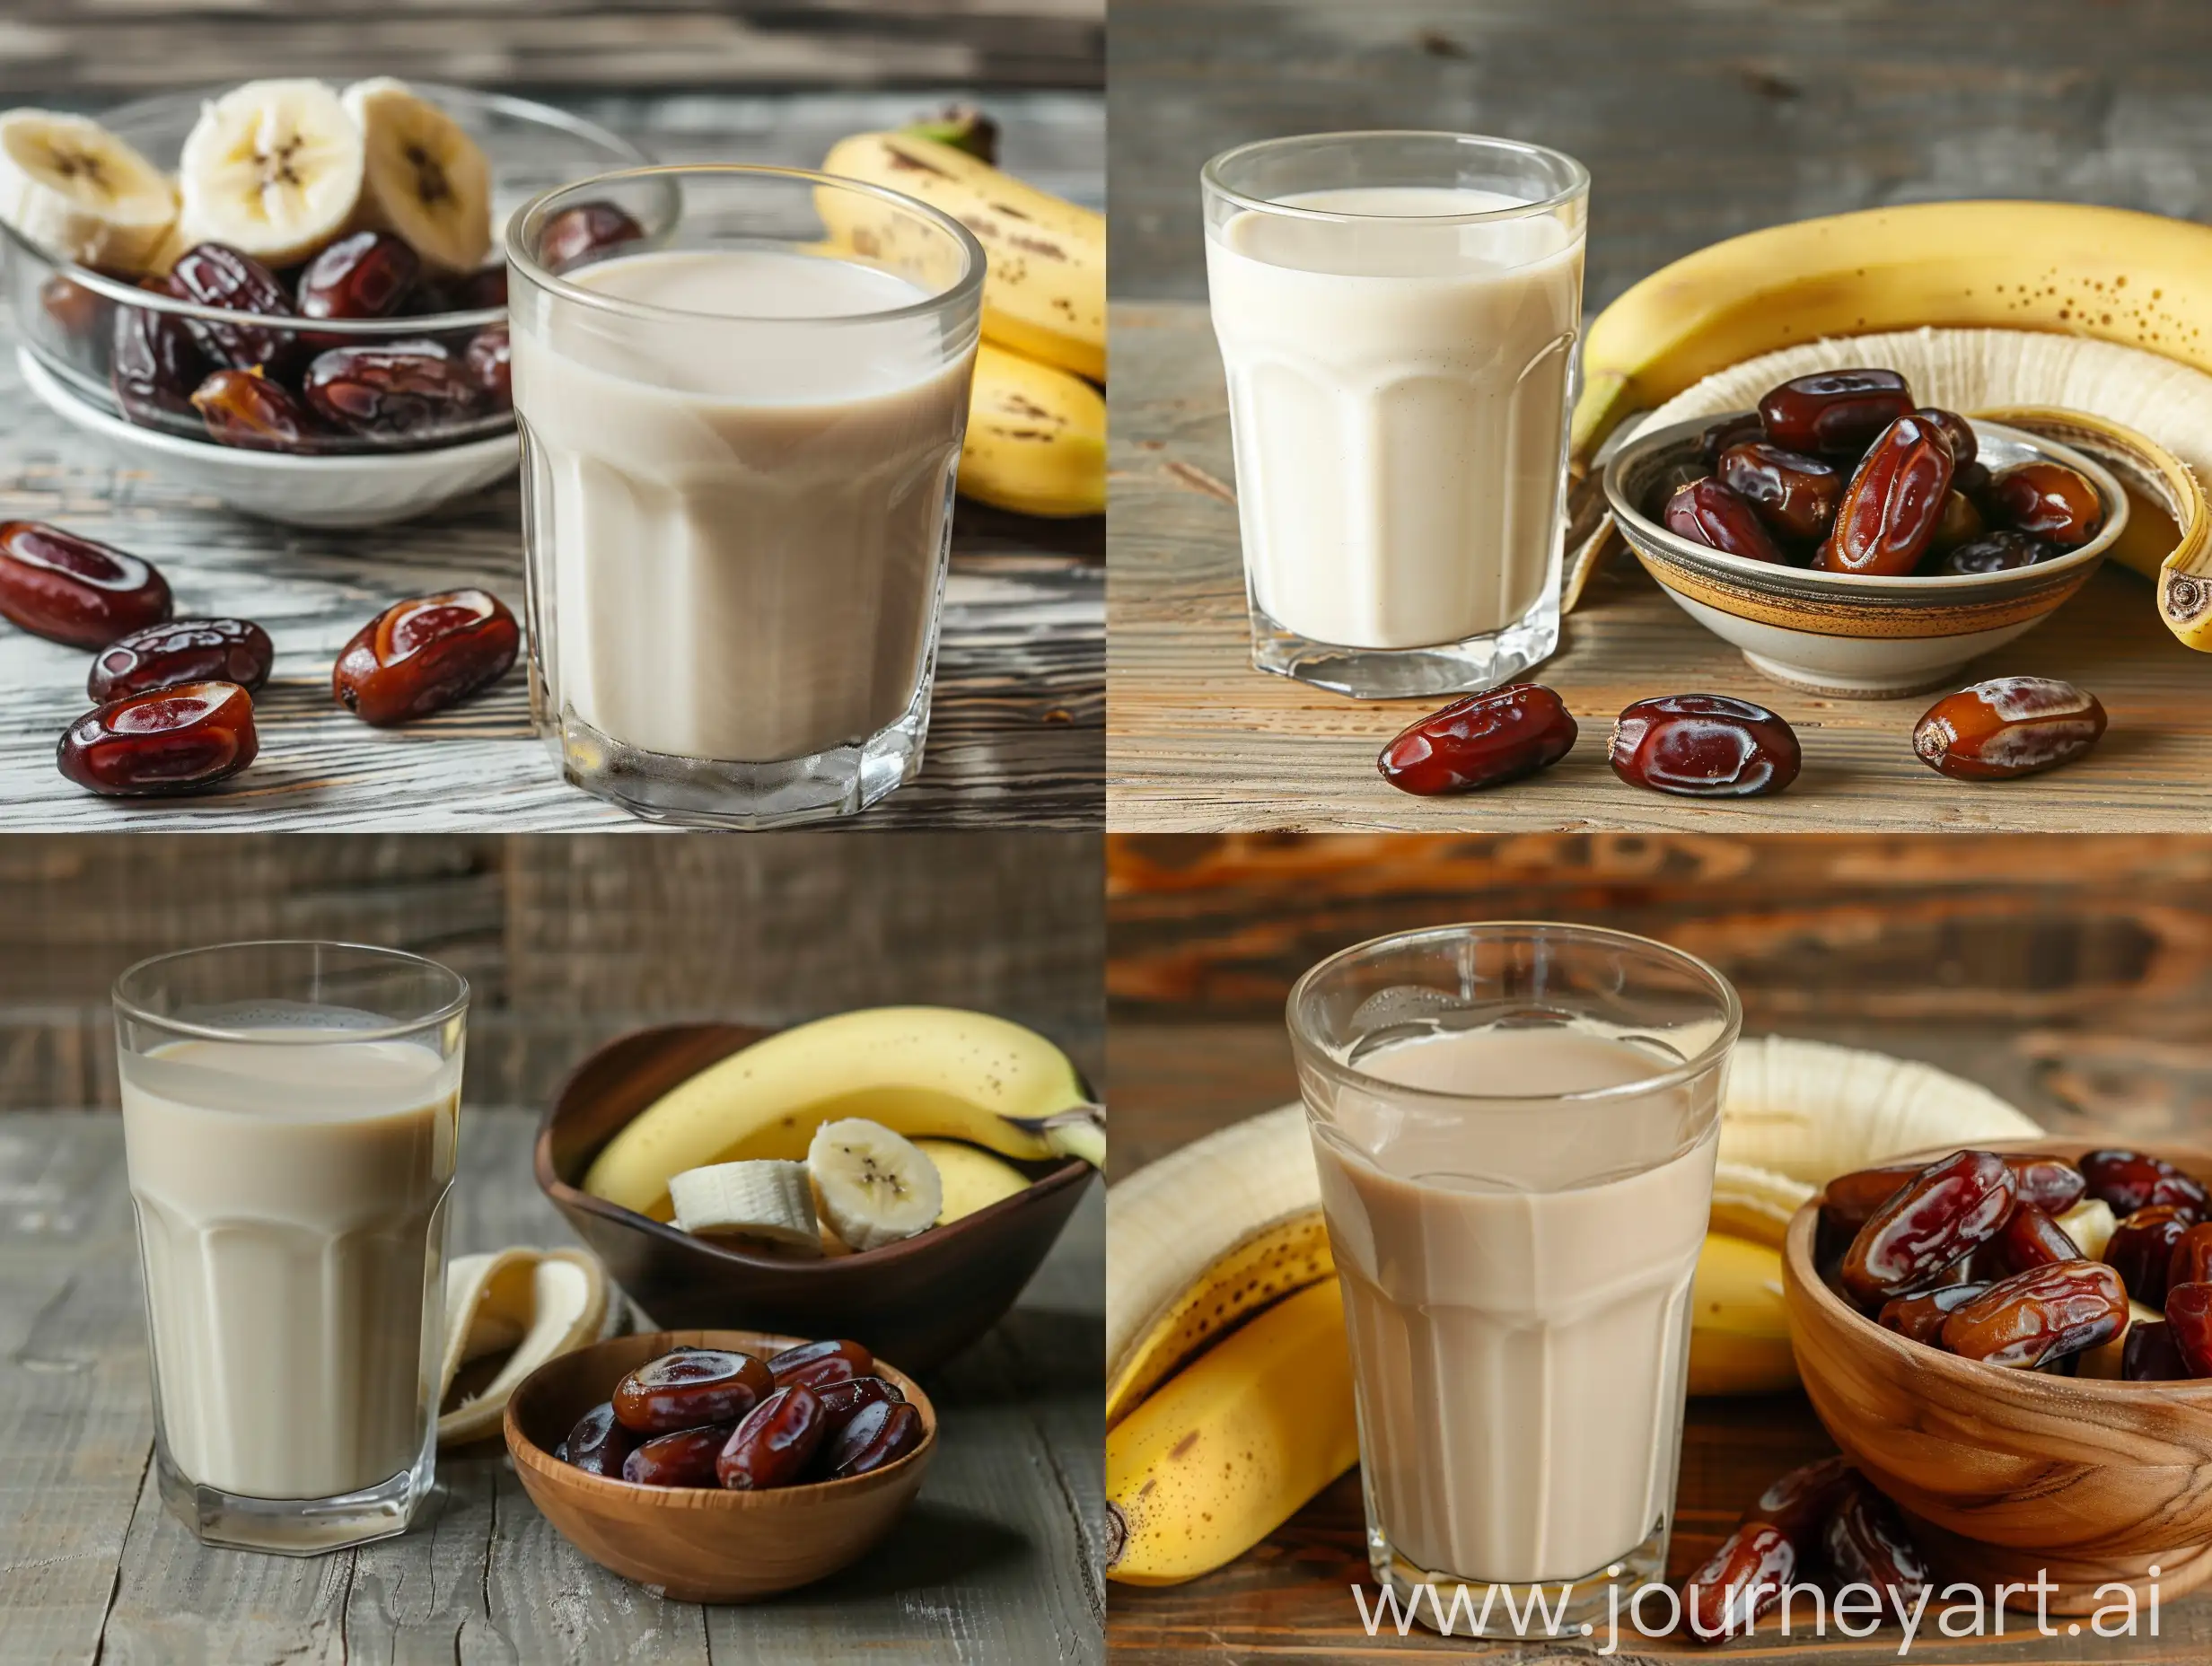 Banana-Milk-and-Dates-Arrangement-on-Wooden-Table